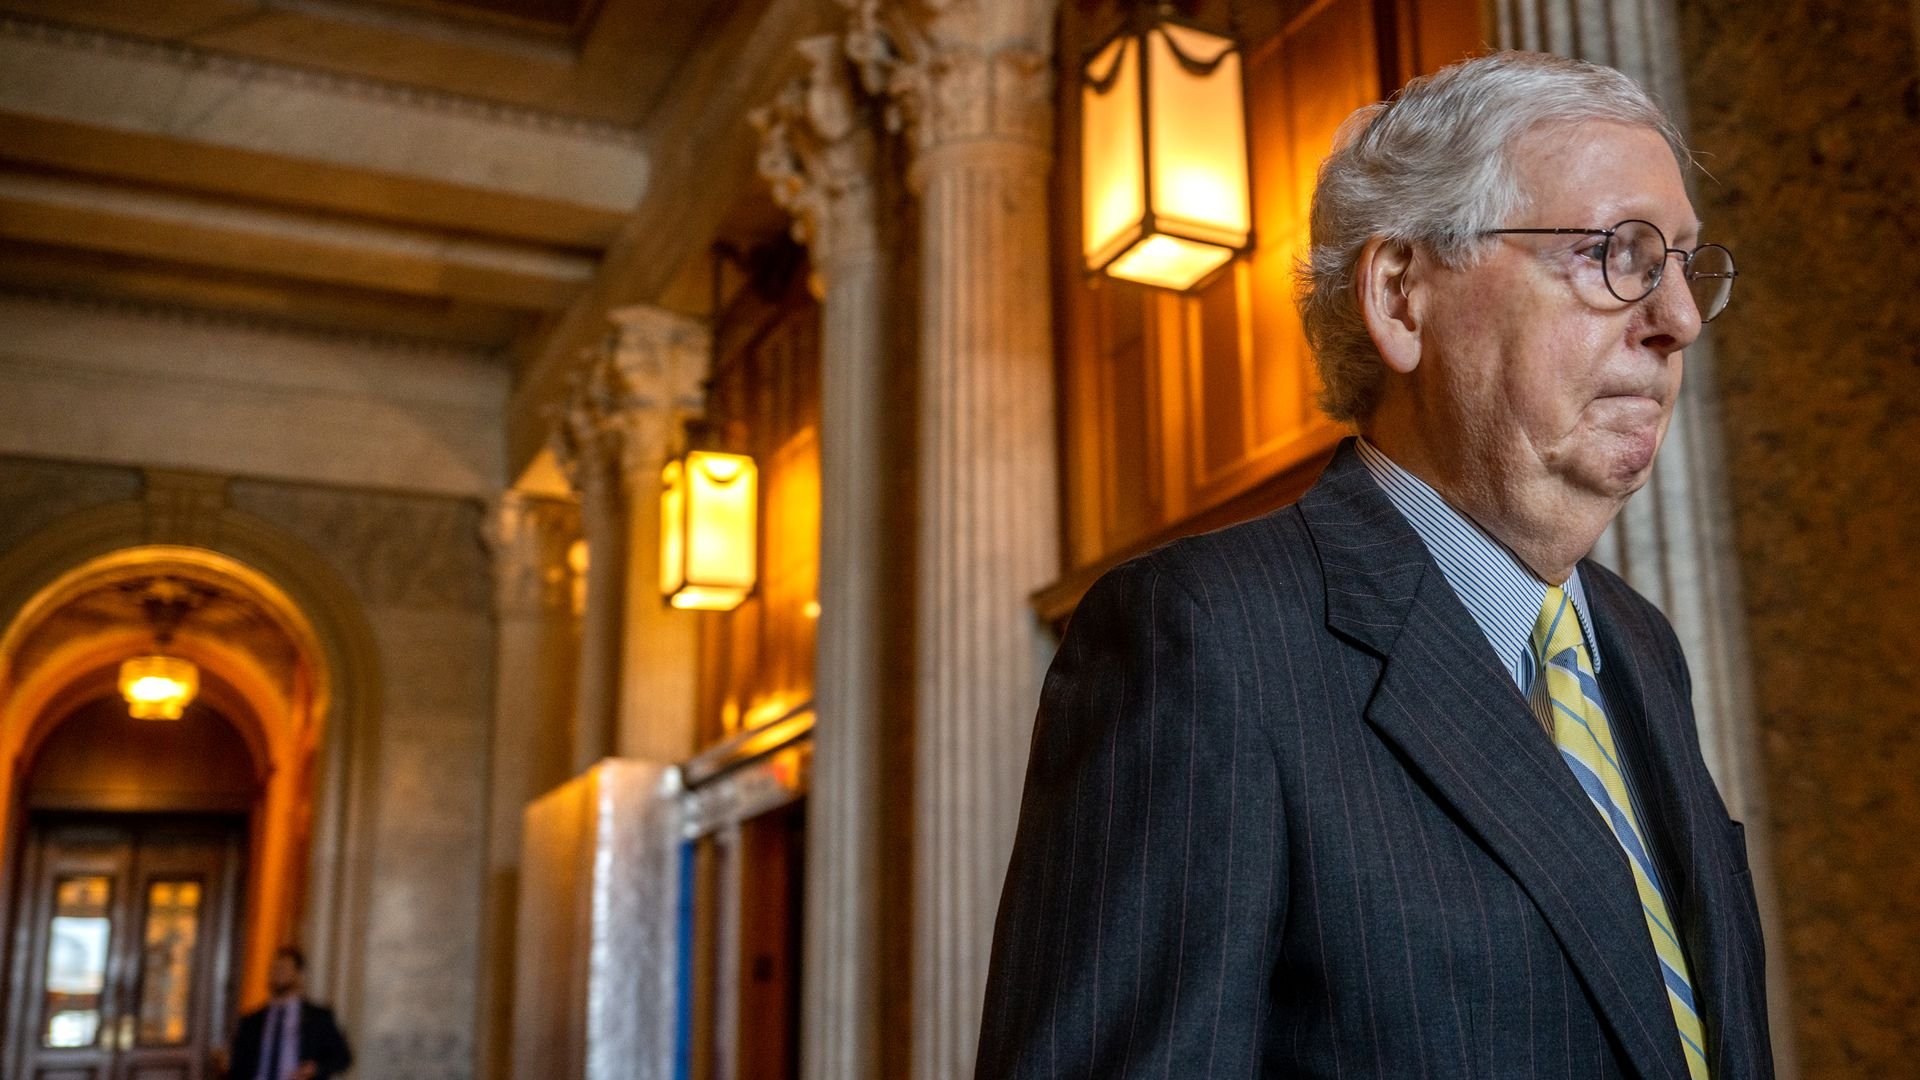 McConnell: Blocking Obama's SCOTUS pick led to overturning Roe v. Wade